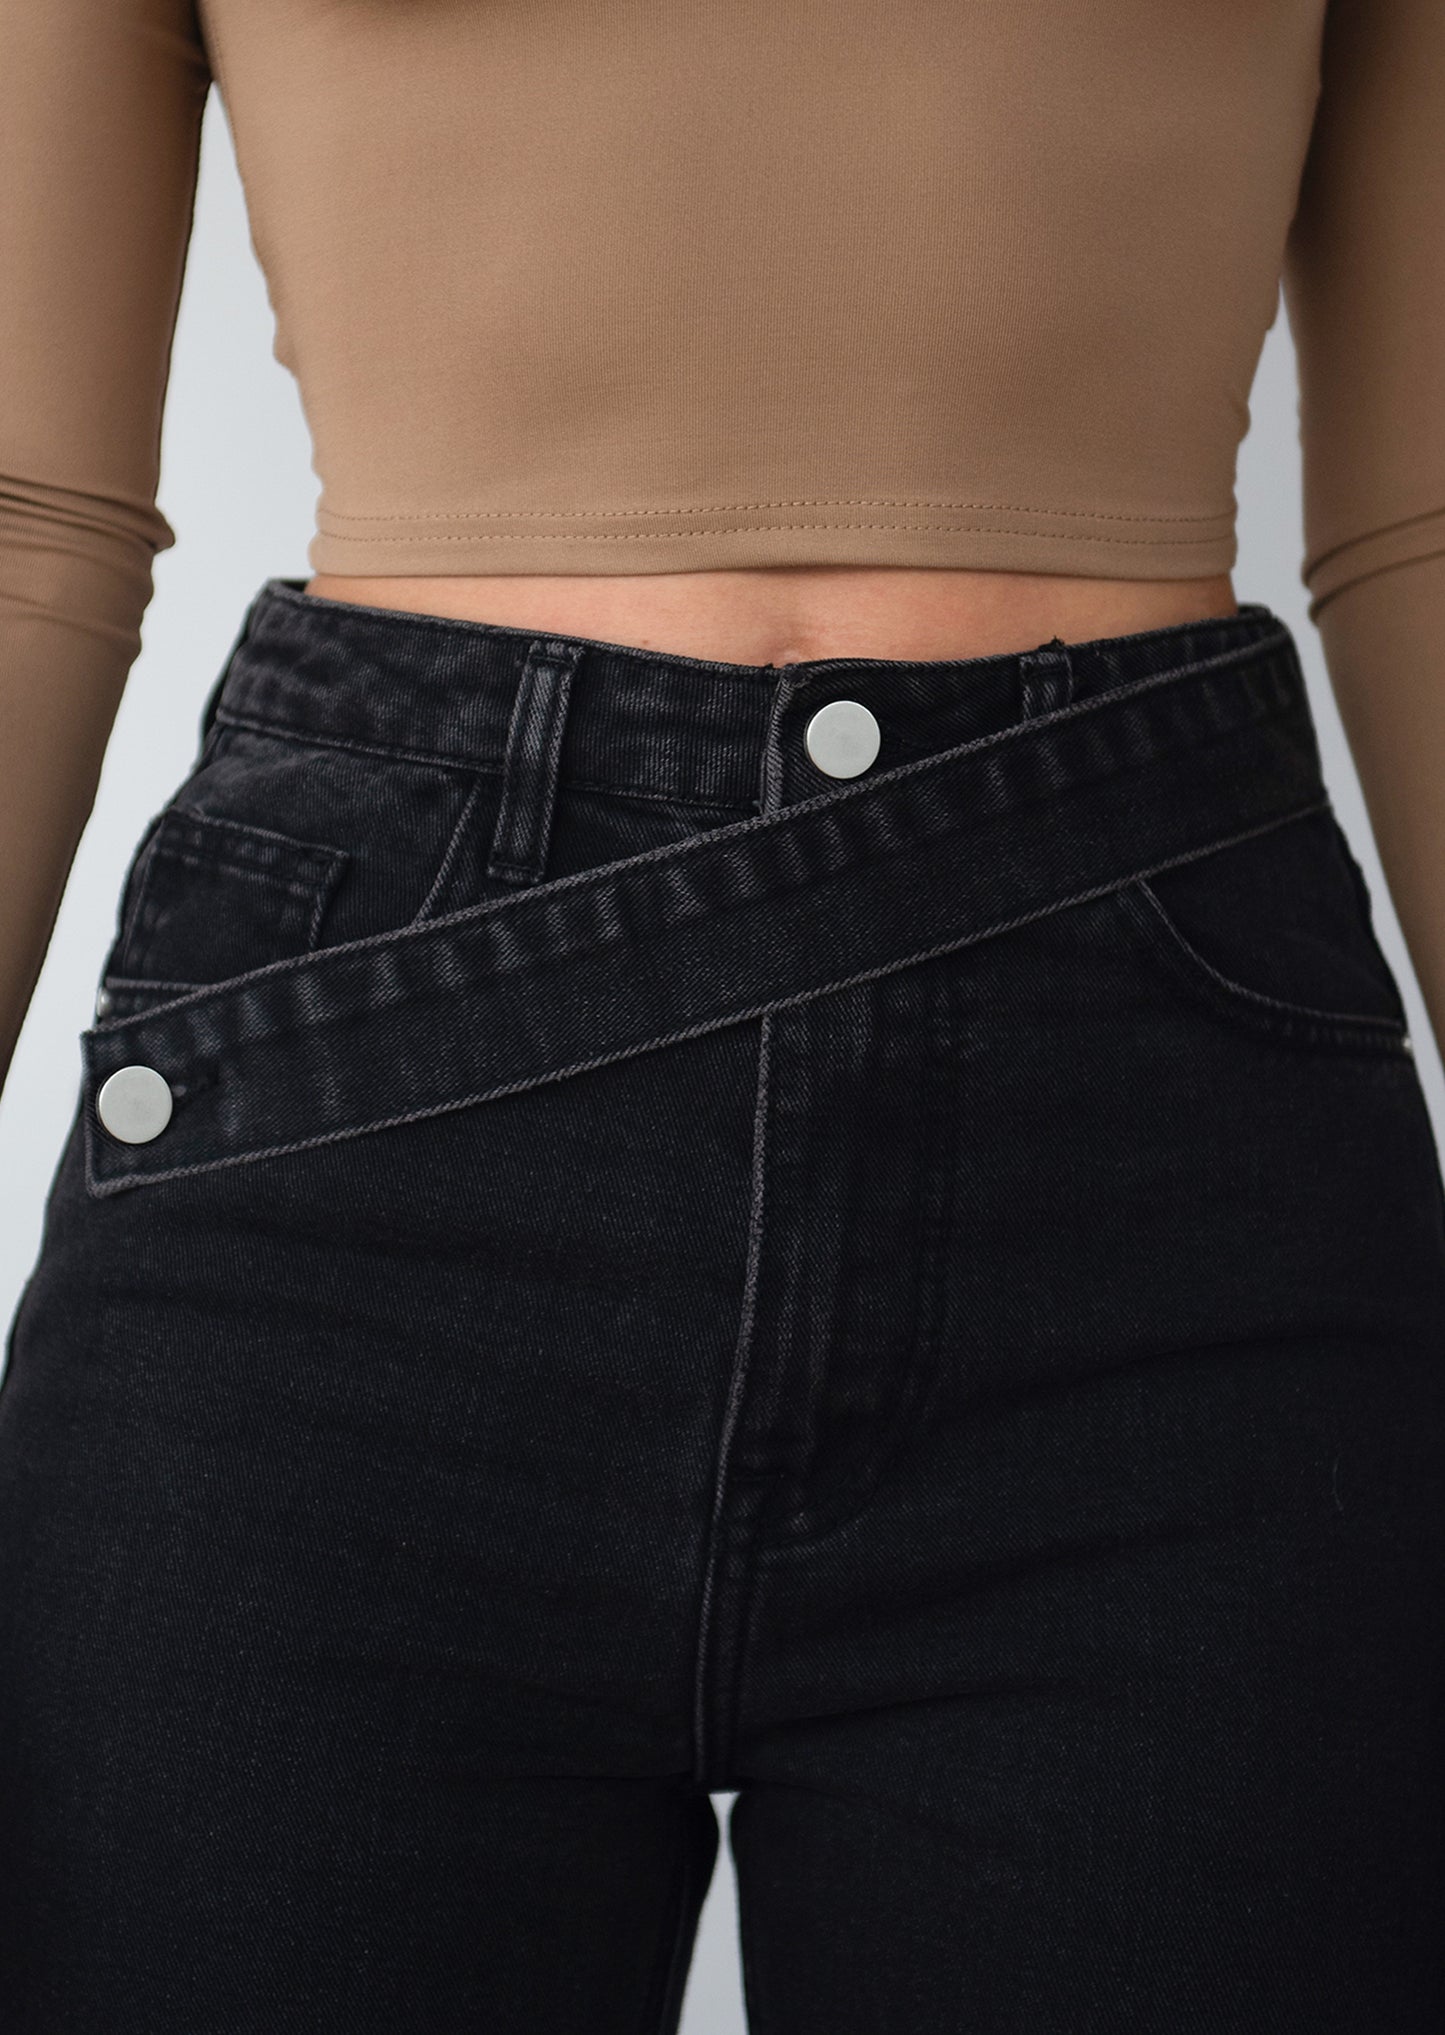 Jeans with asymmetric belt in black